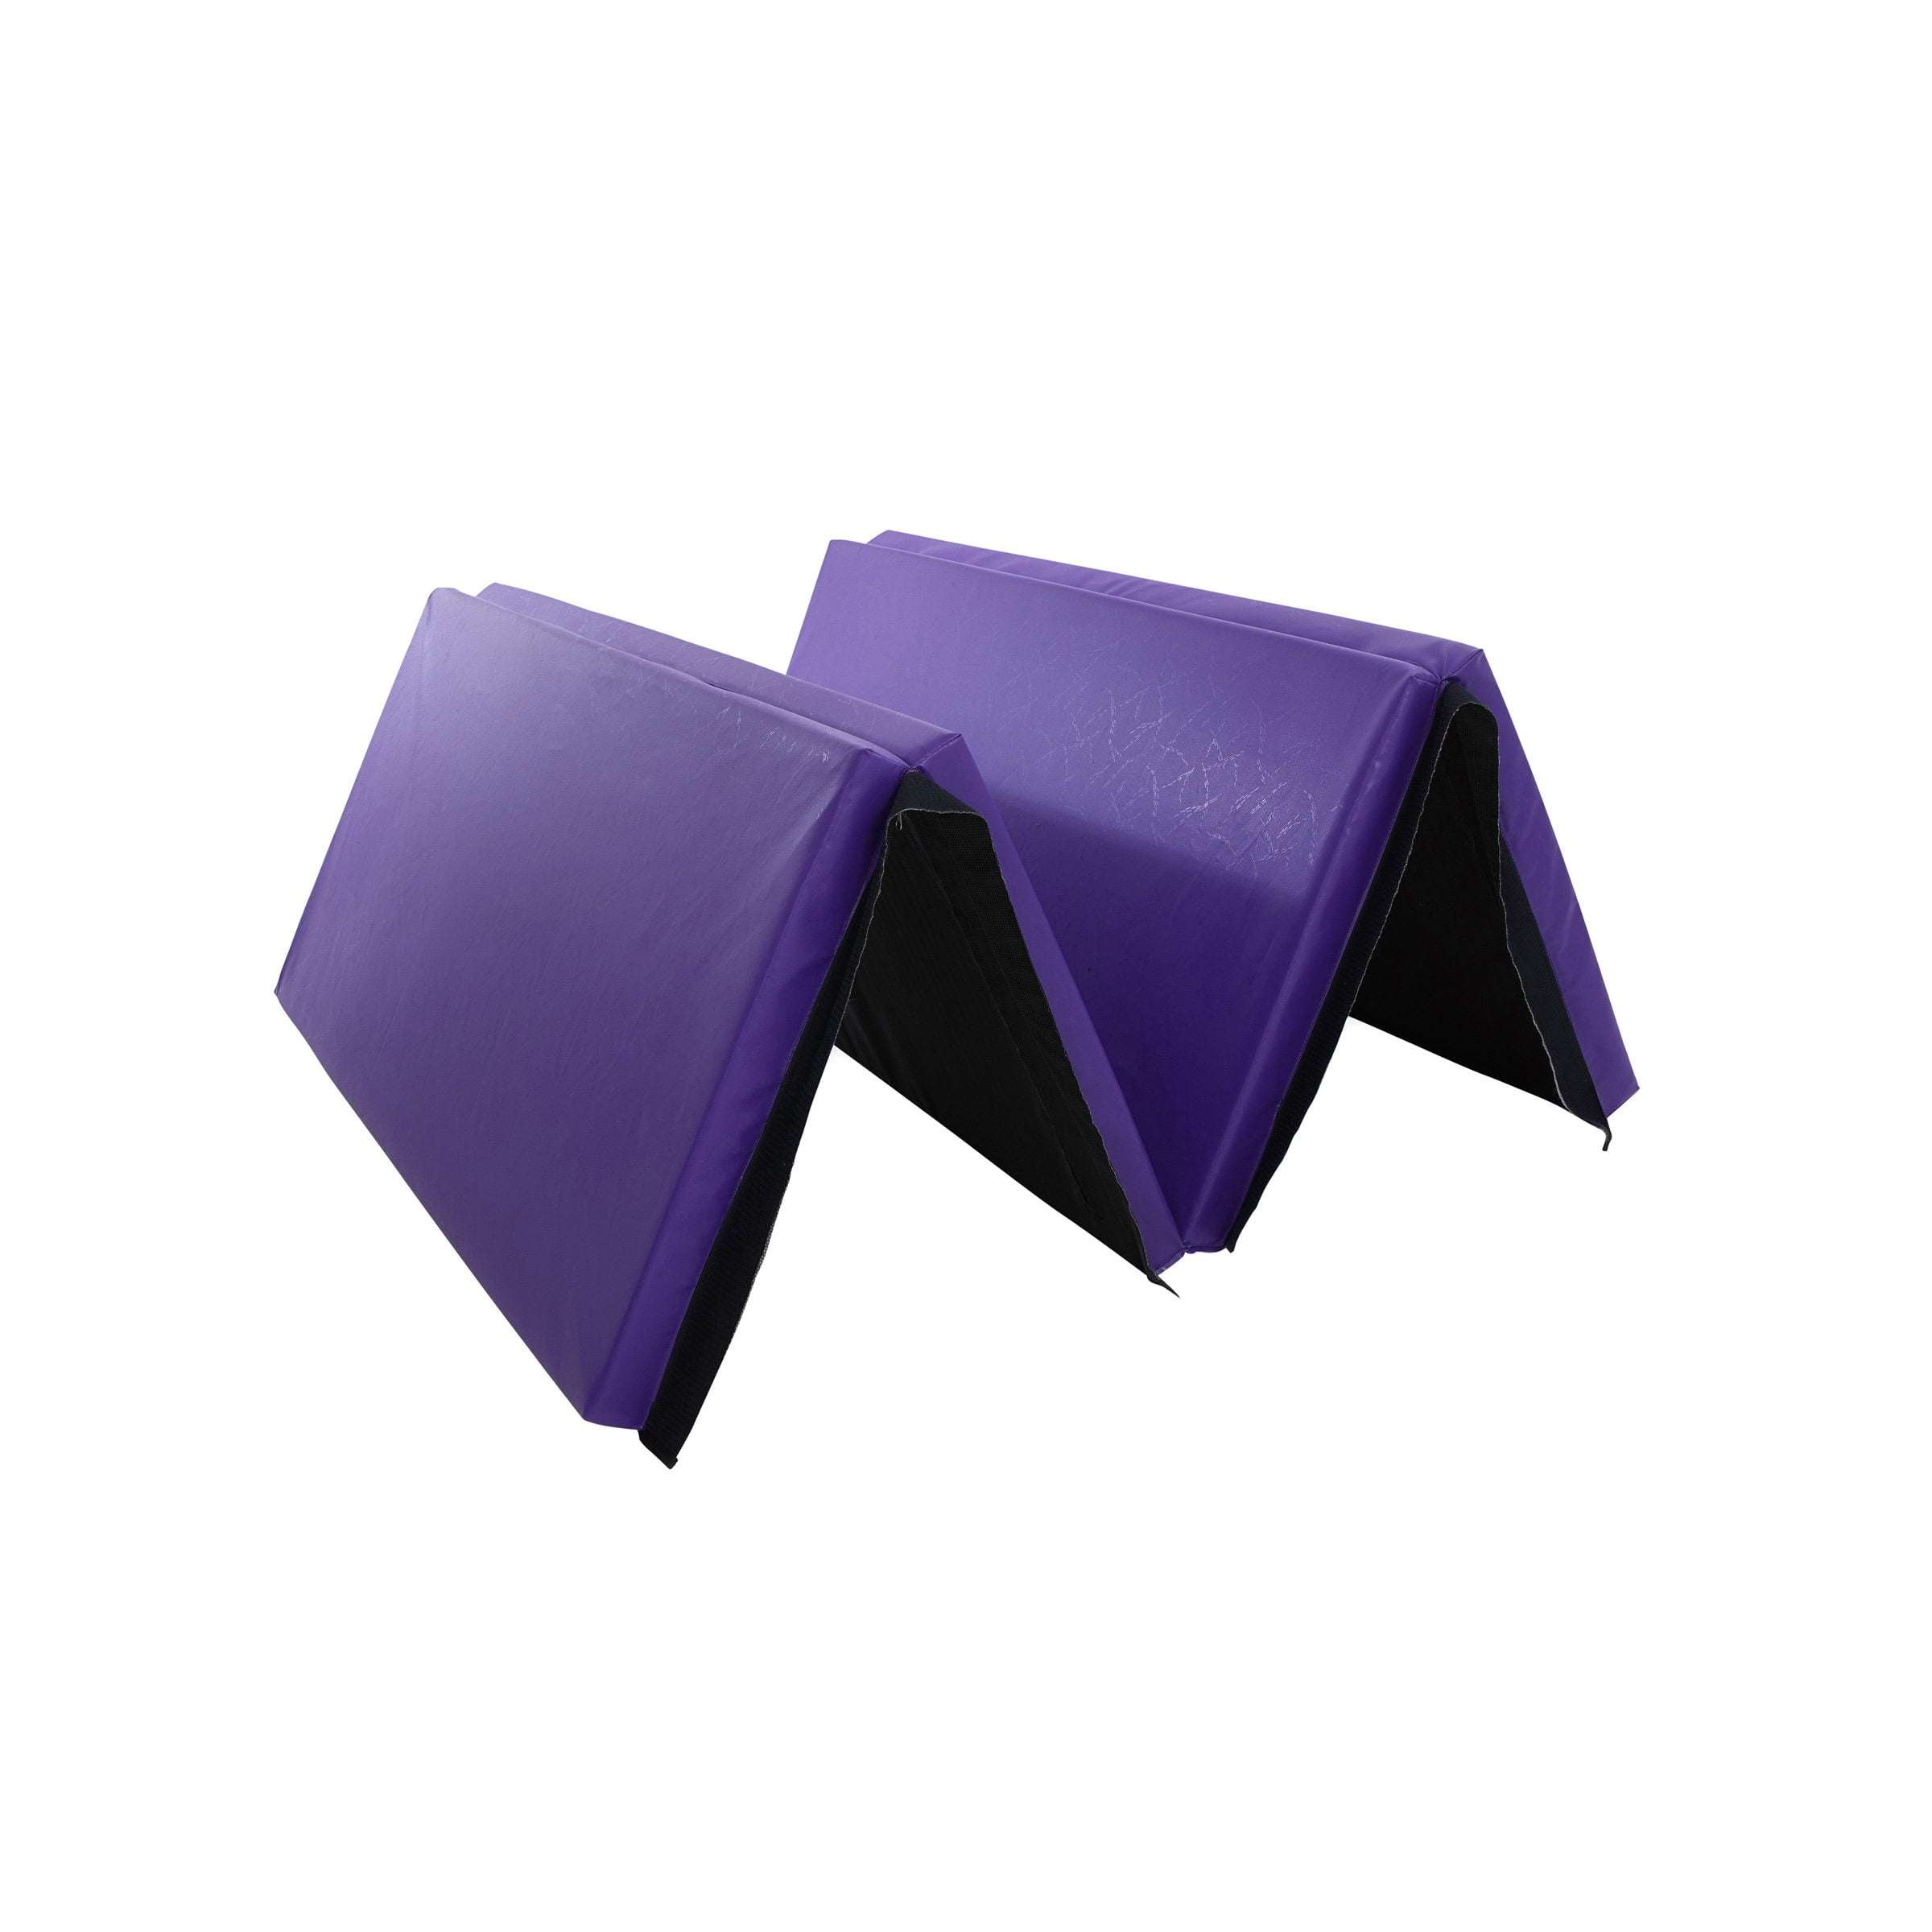 Foldable Gymnastics Mat - Buy The 